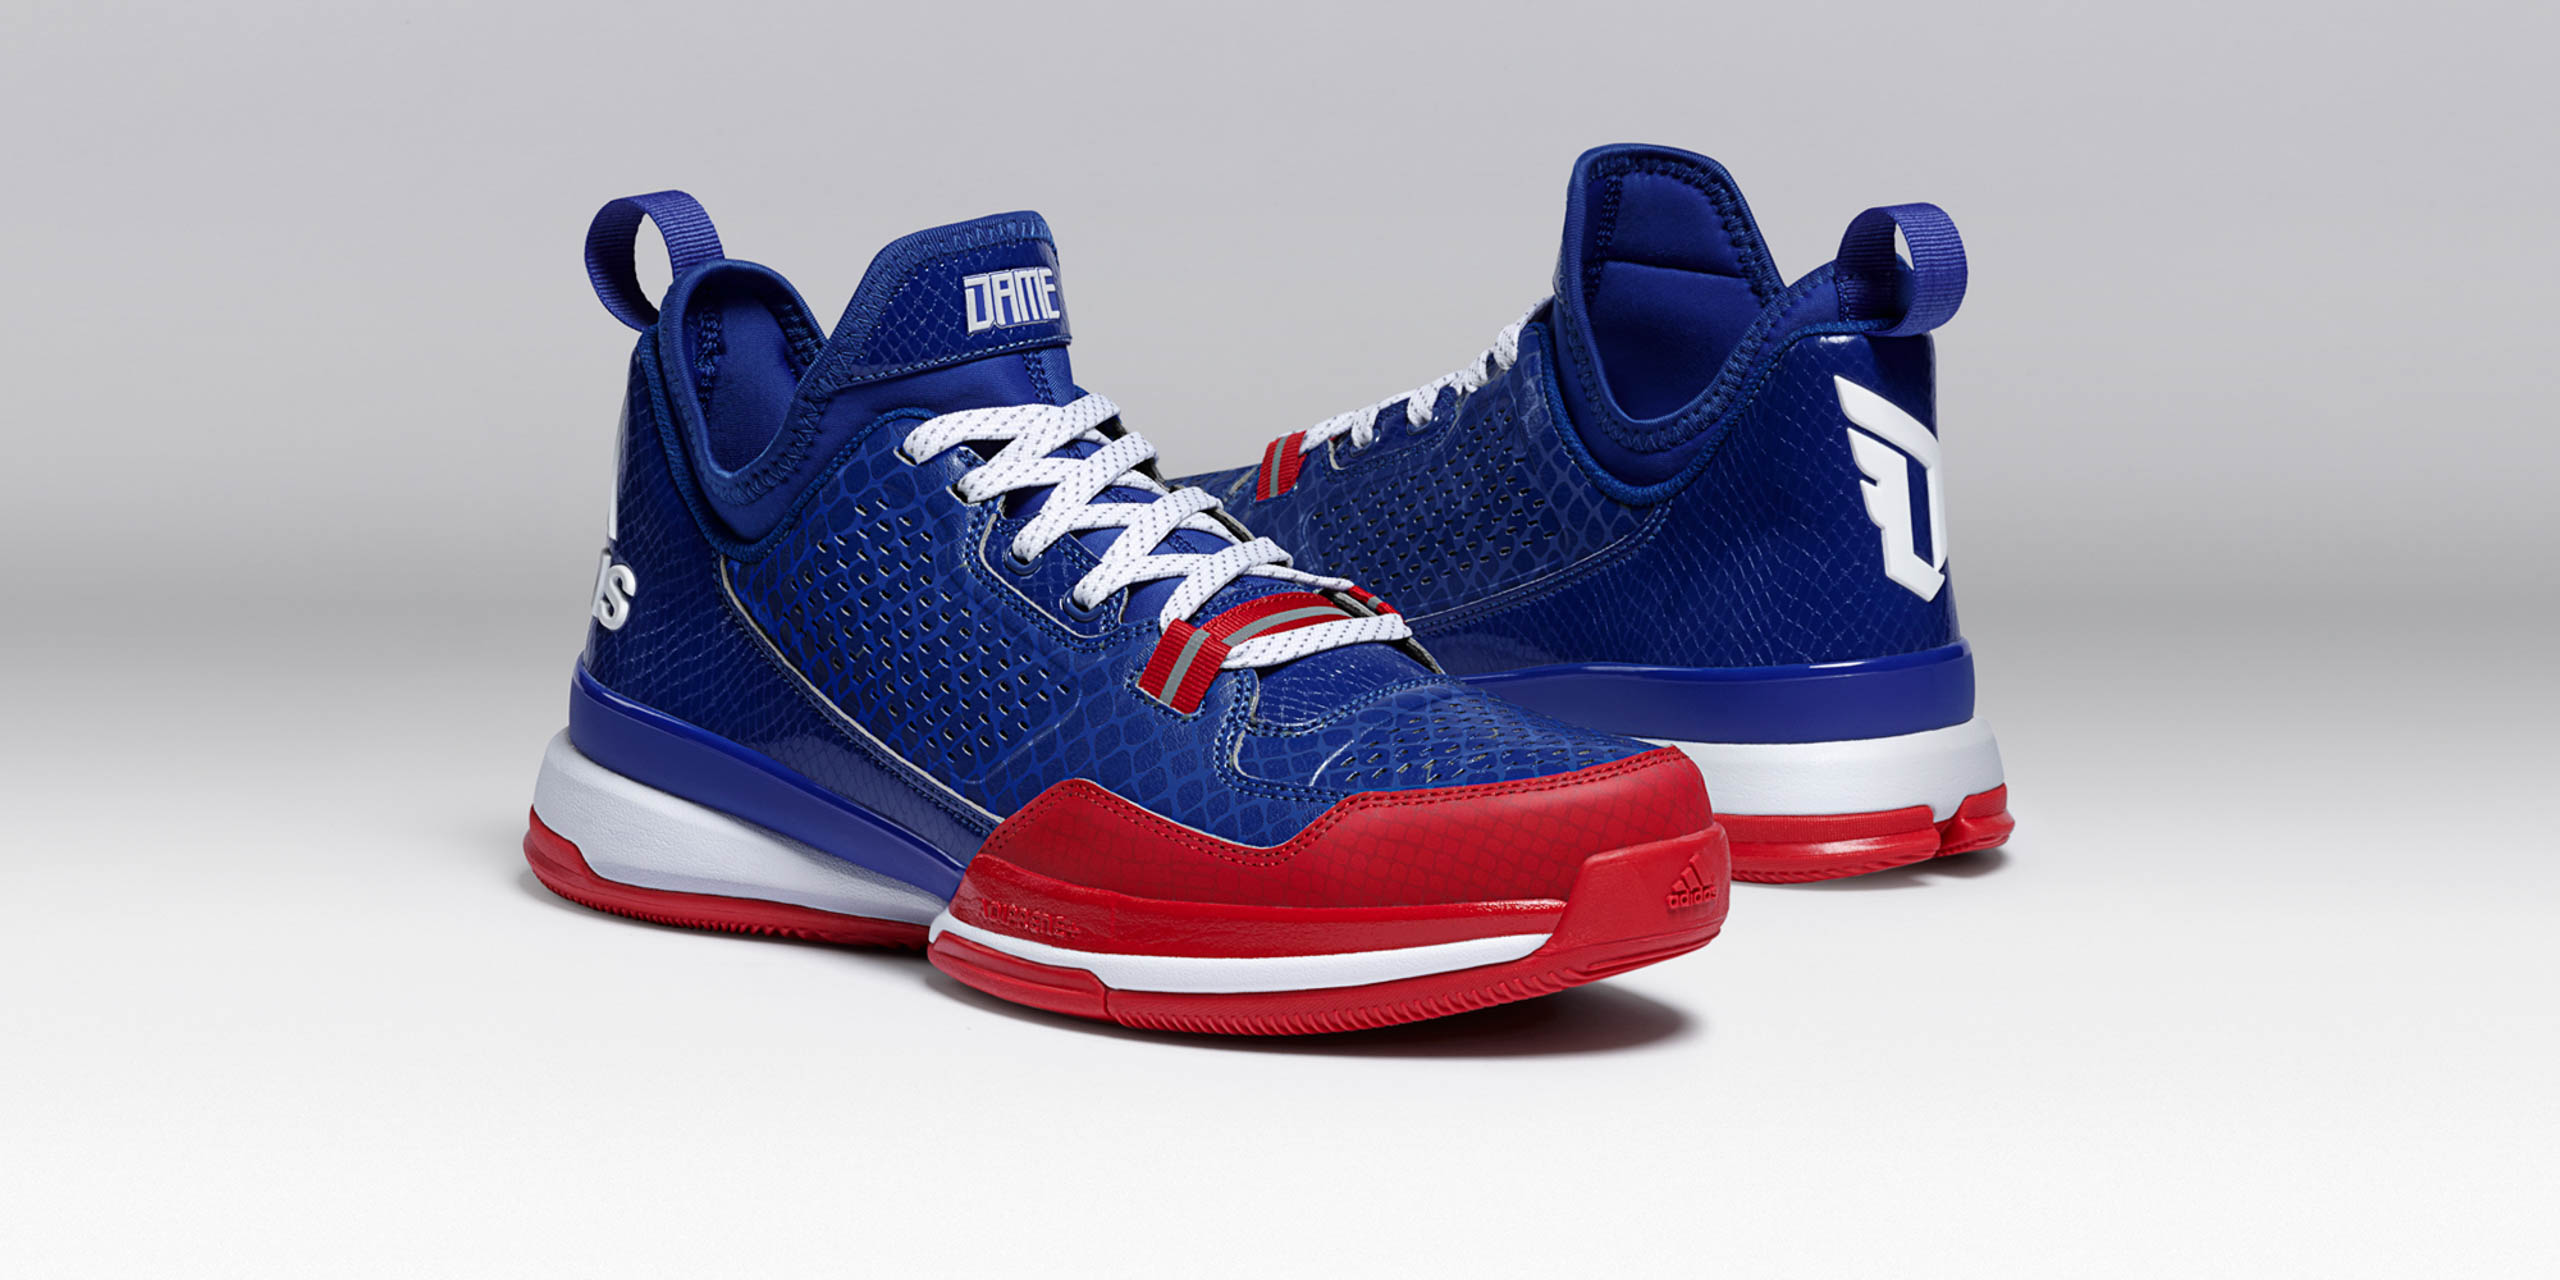 Adidas DLillard1 basketball shoe